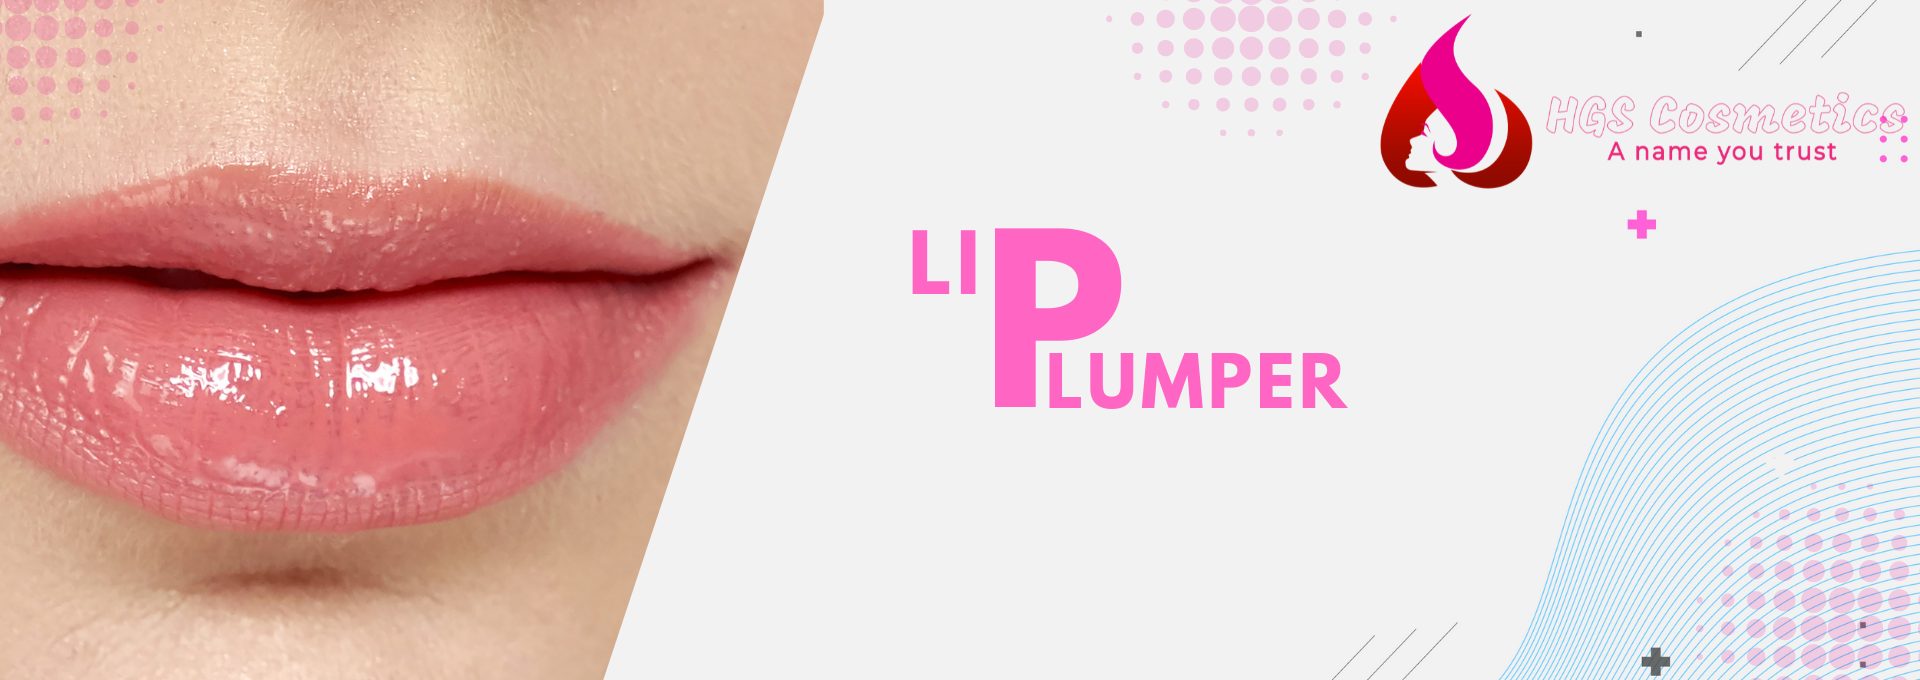 Shop Best Lip Plumper products Online @ HGS Cosmetics